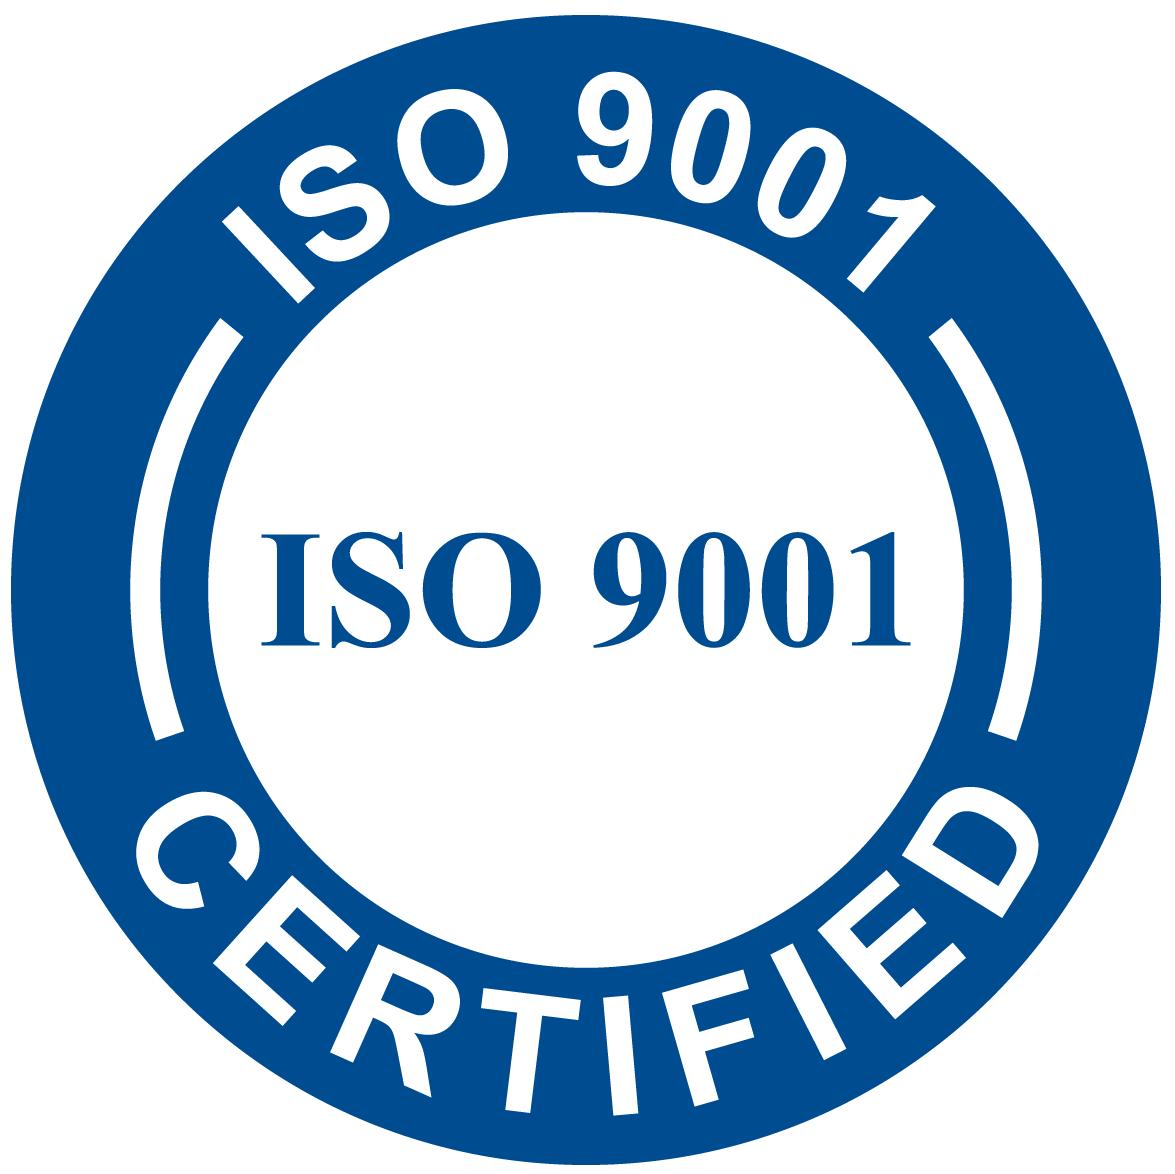 Savaco iso 9001 certification logo